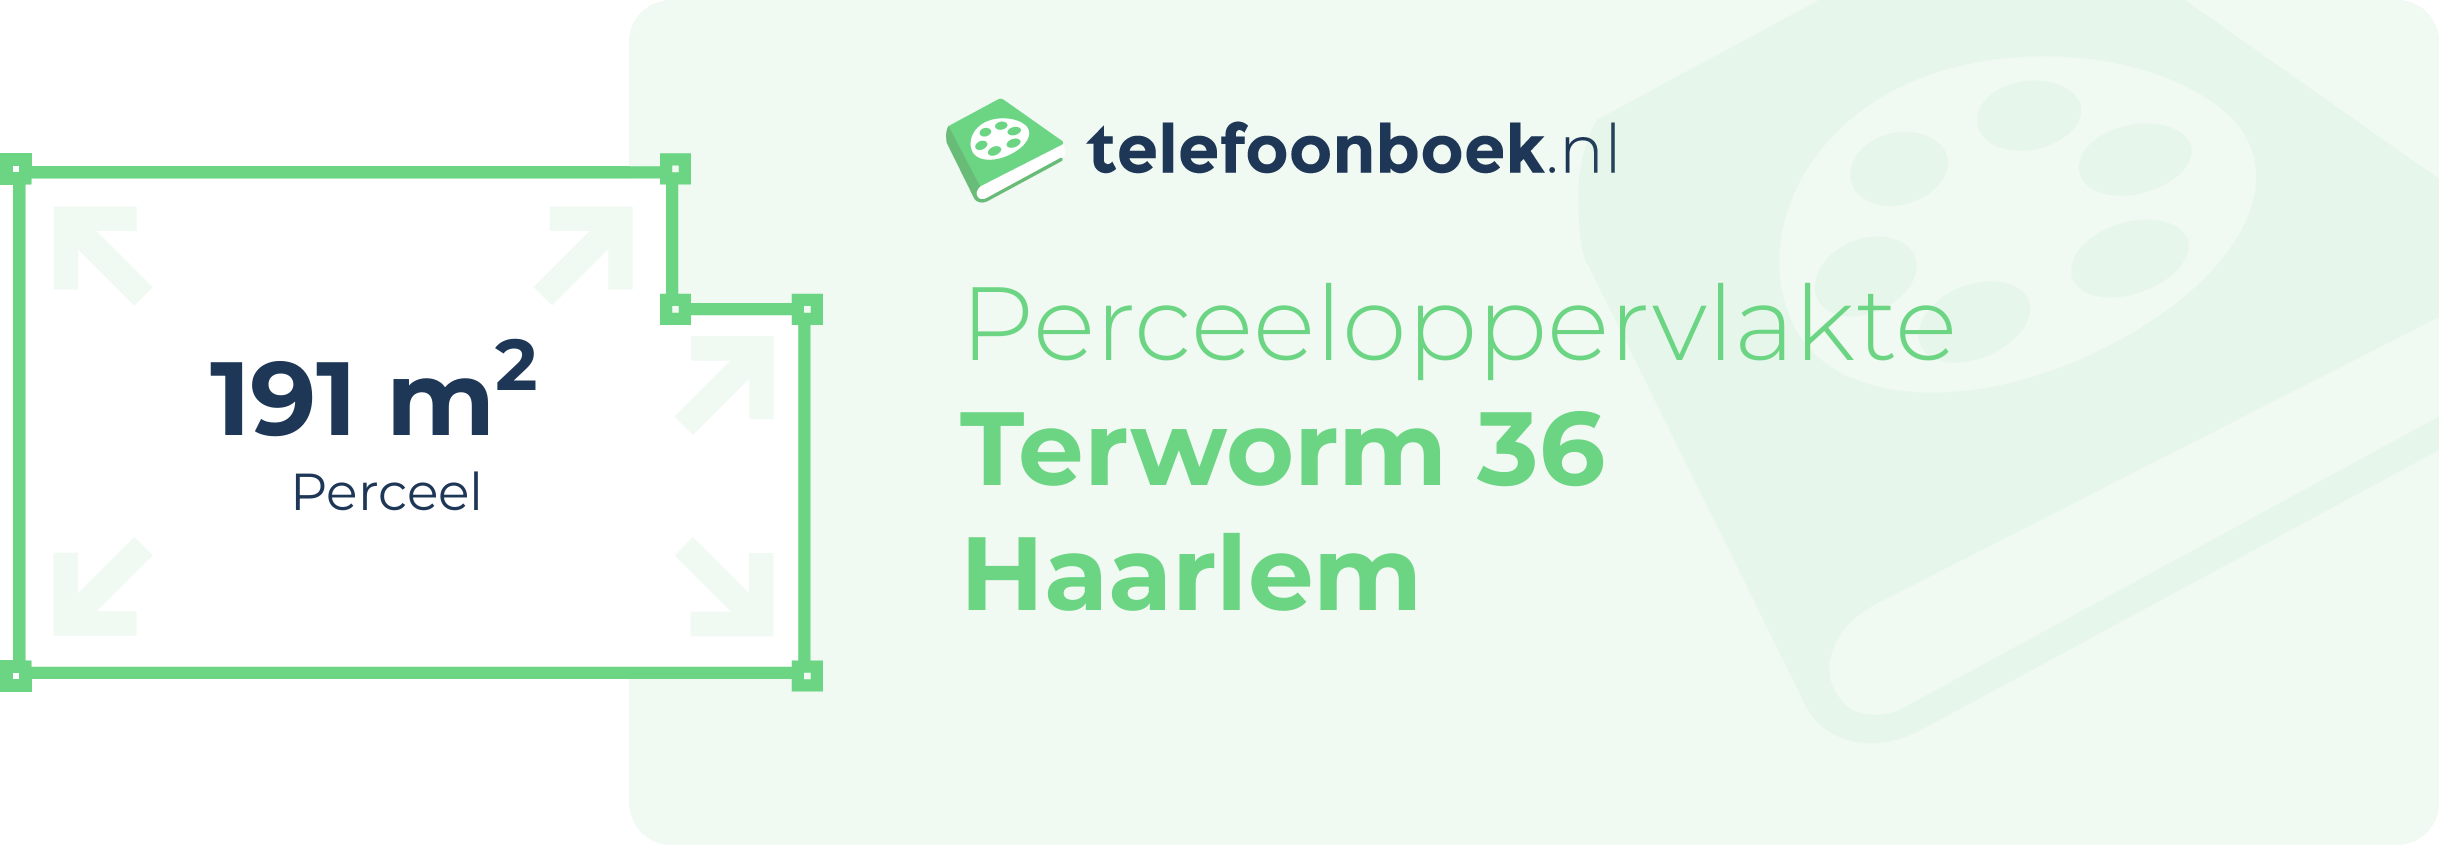 Perceeloppervlakte Terworm 36 Haarlem